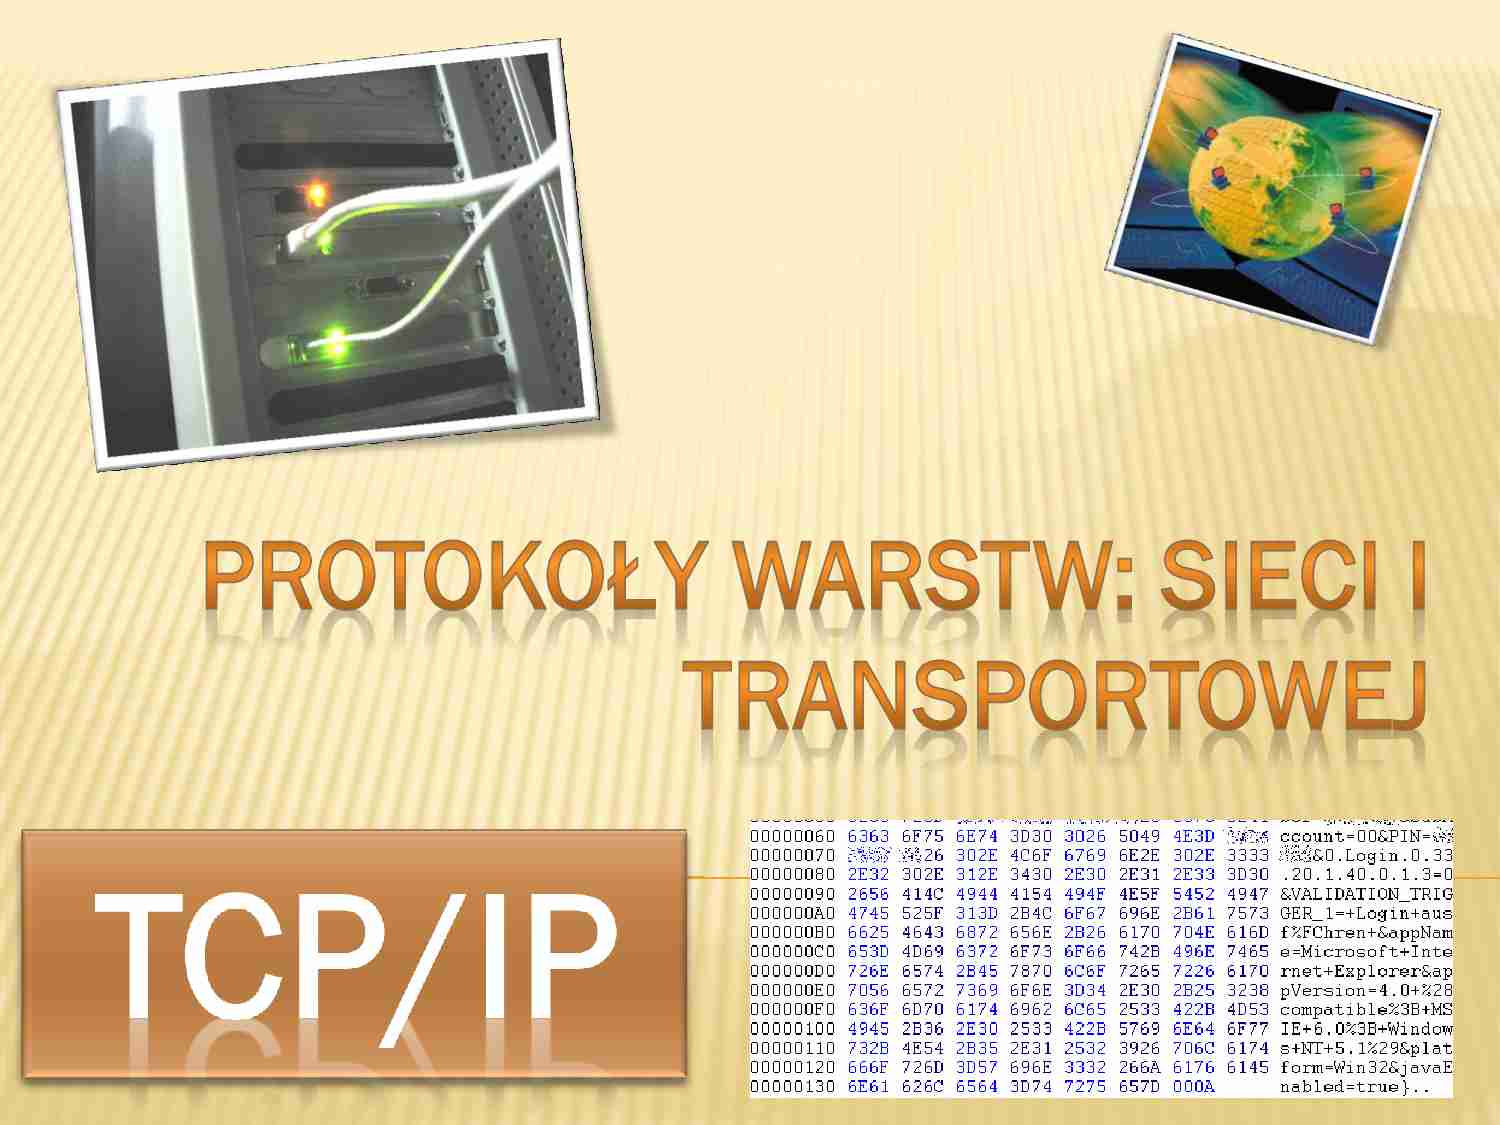 Transmission Control  Protocol - strona 1